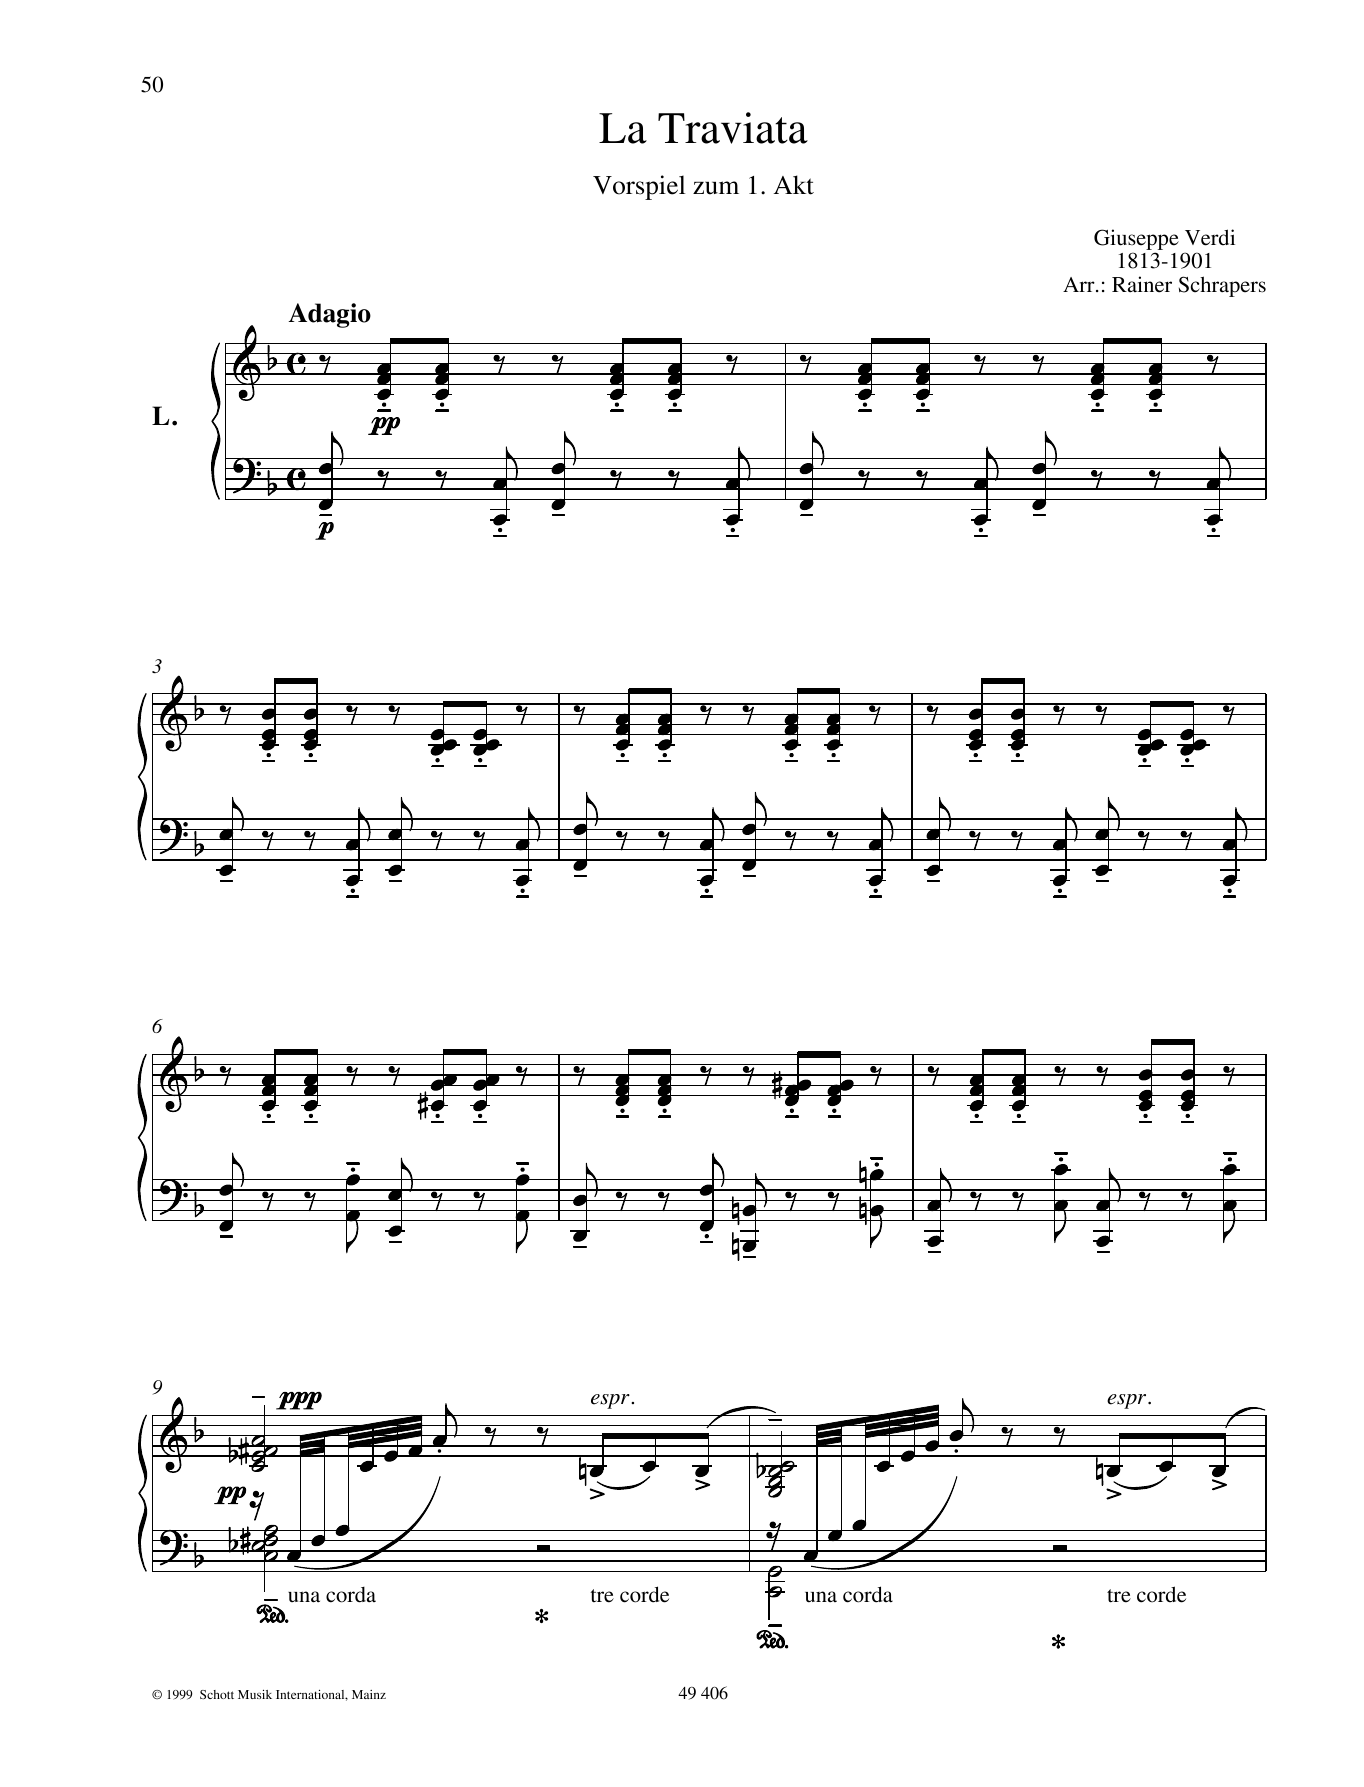 Giuseppe Verdi Prélude Sheet Music Notes & Chords for Piano Duet - Download or Print PDF